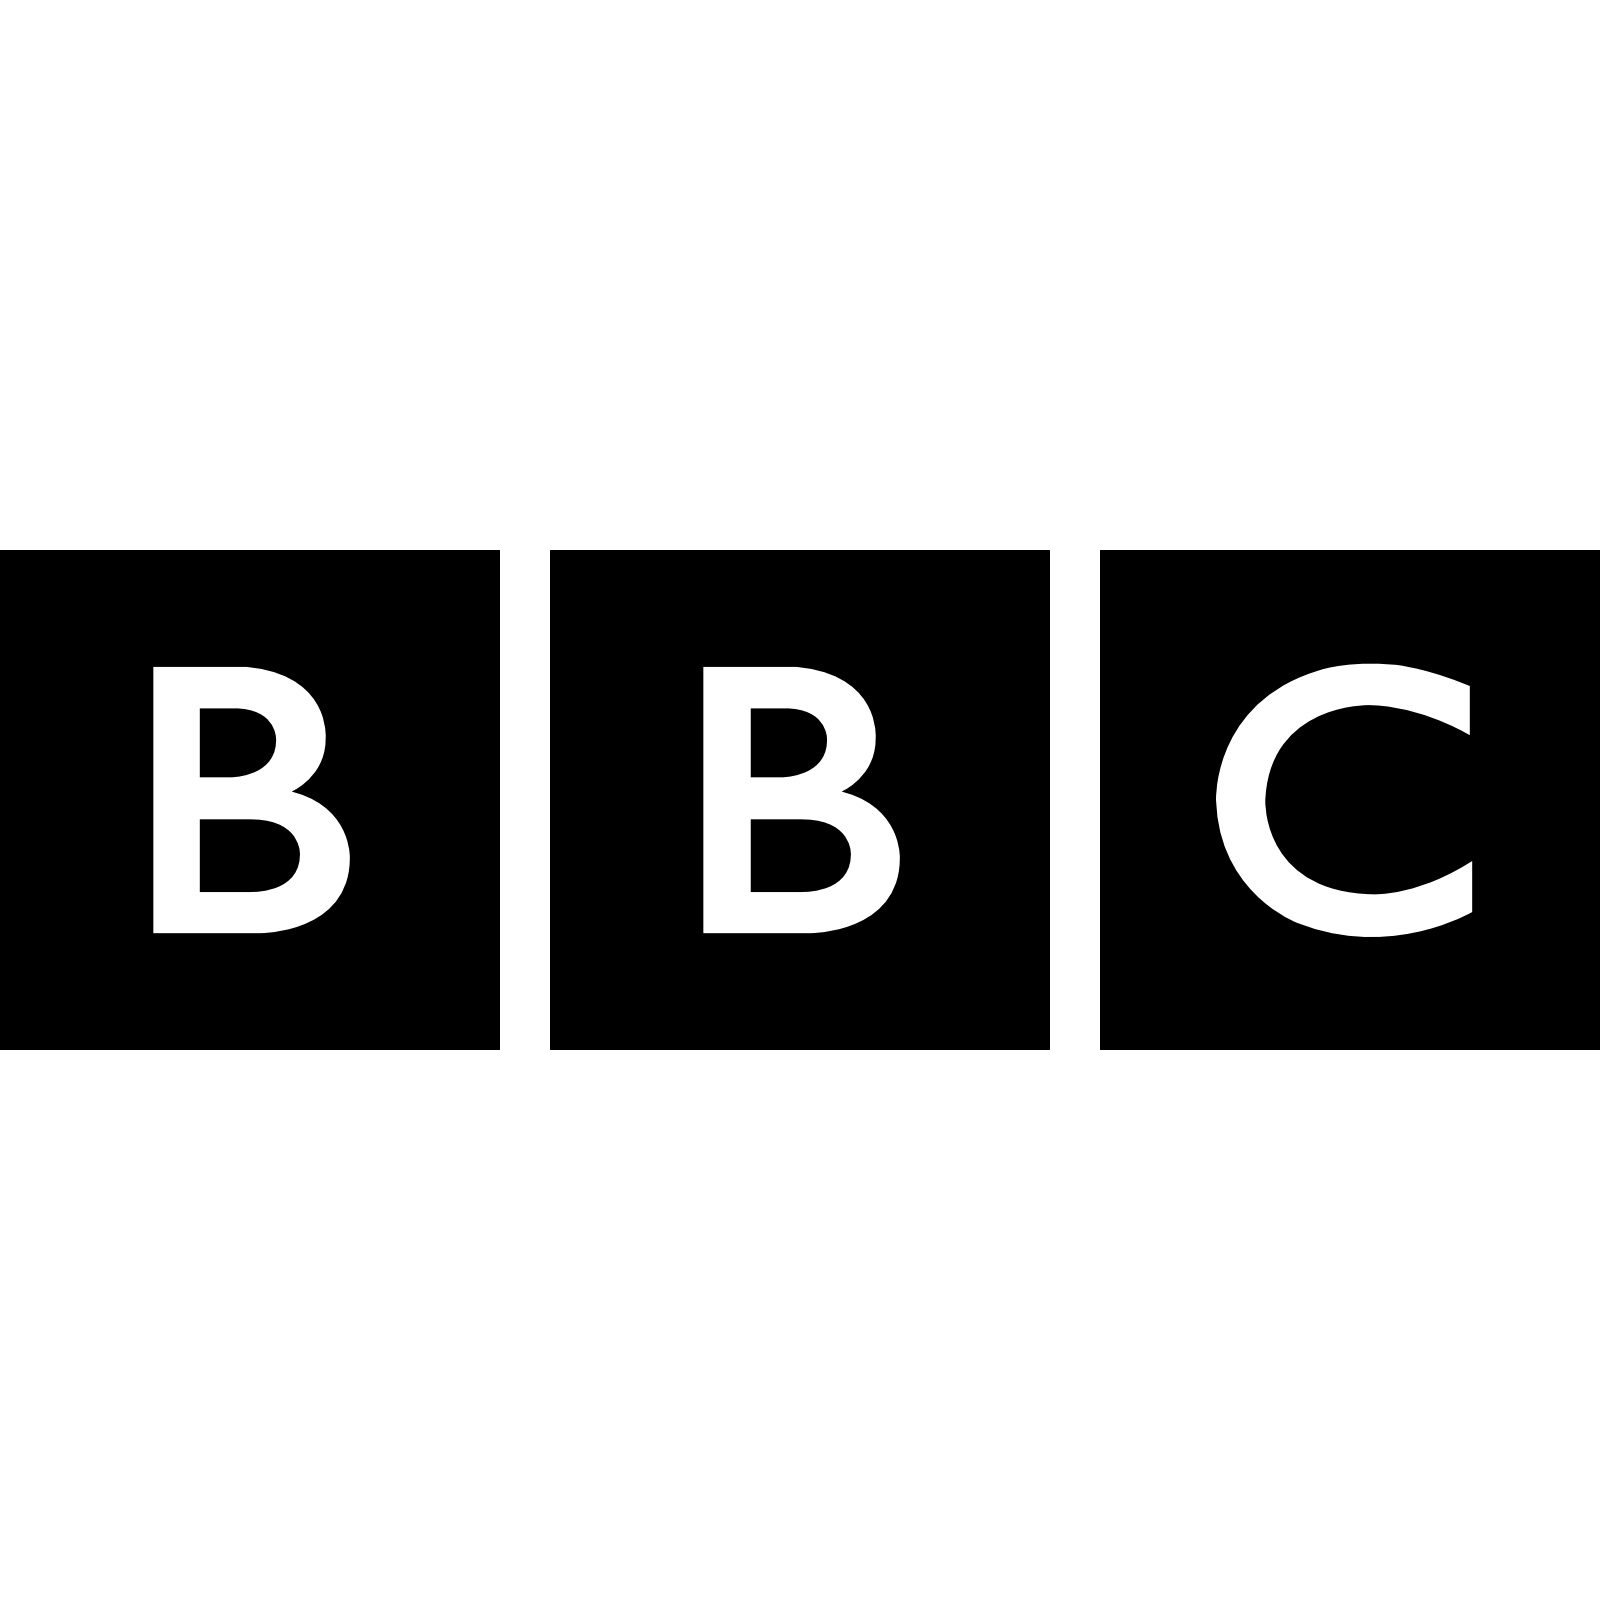 BBC INTRODUCING